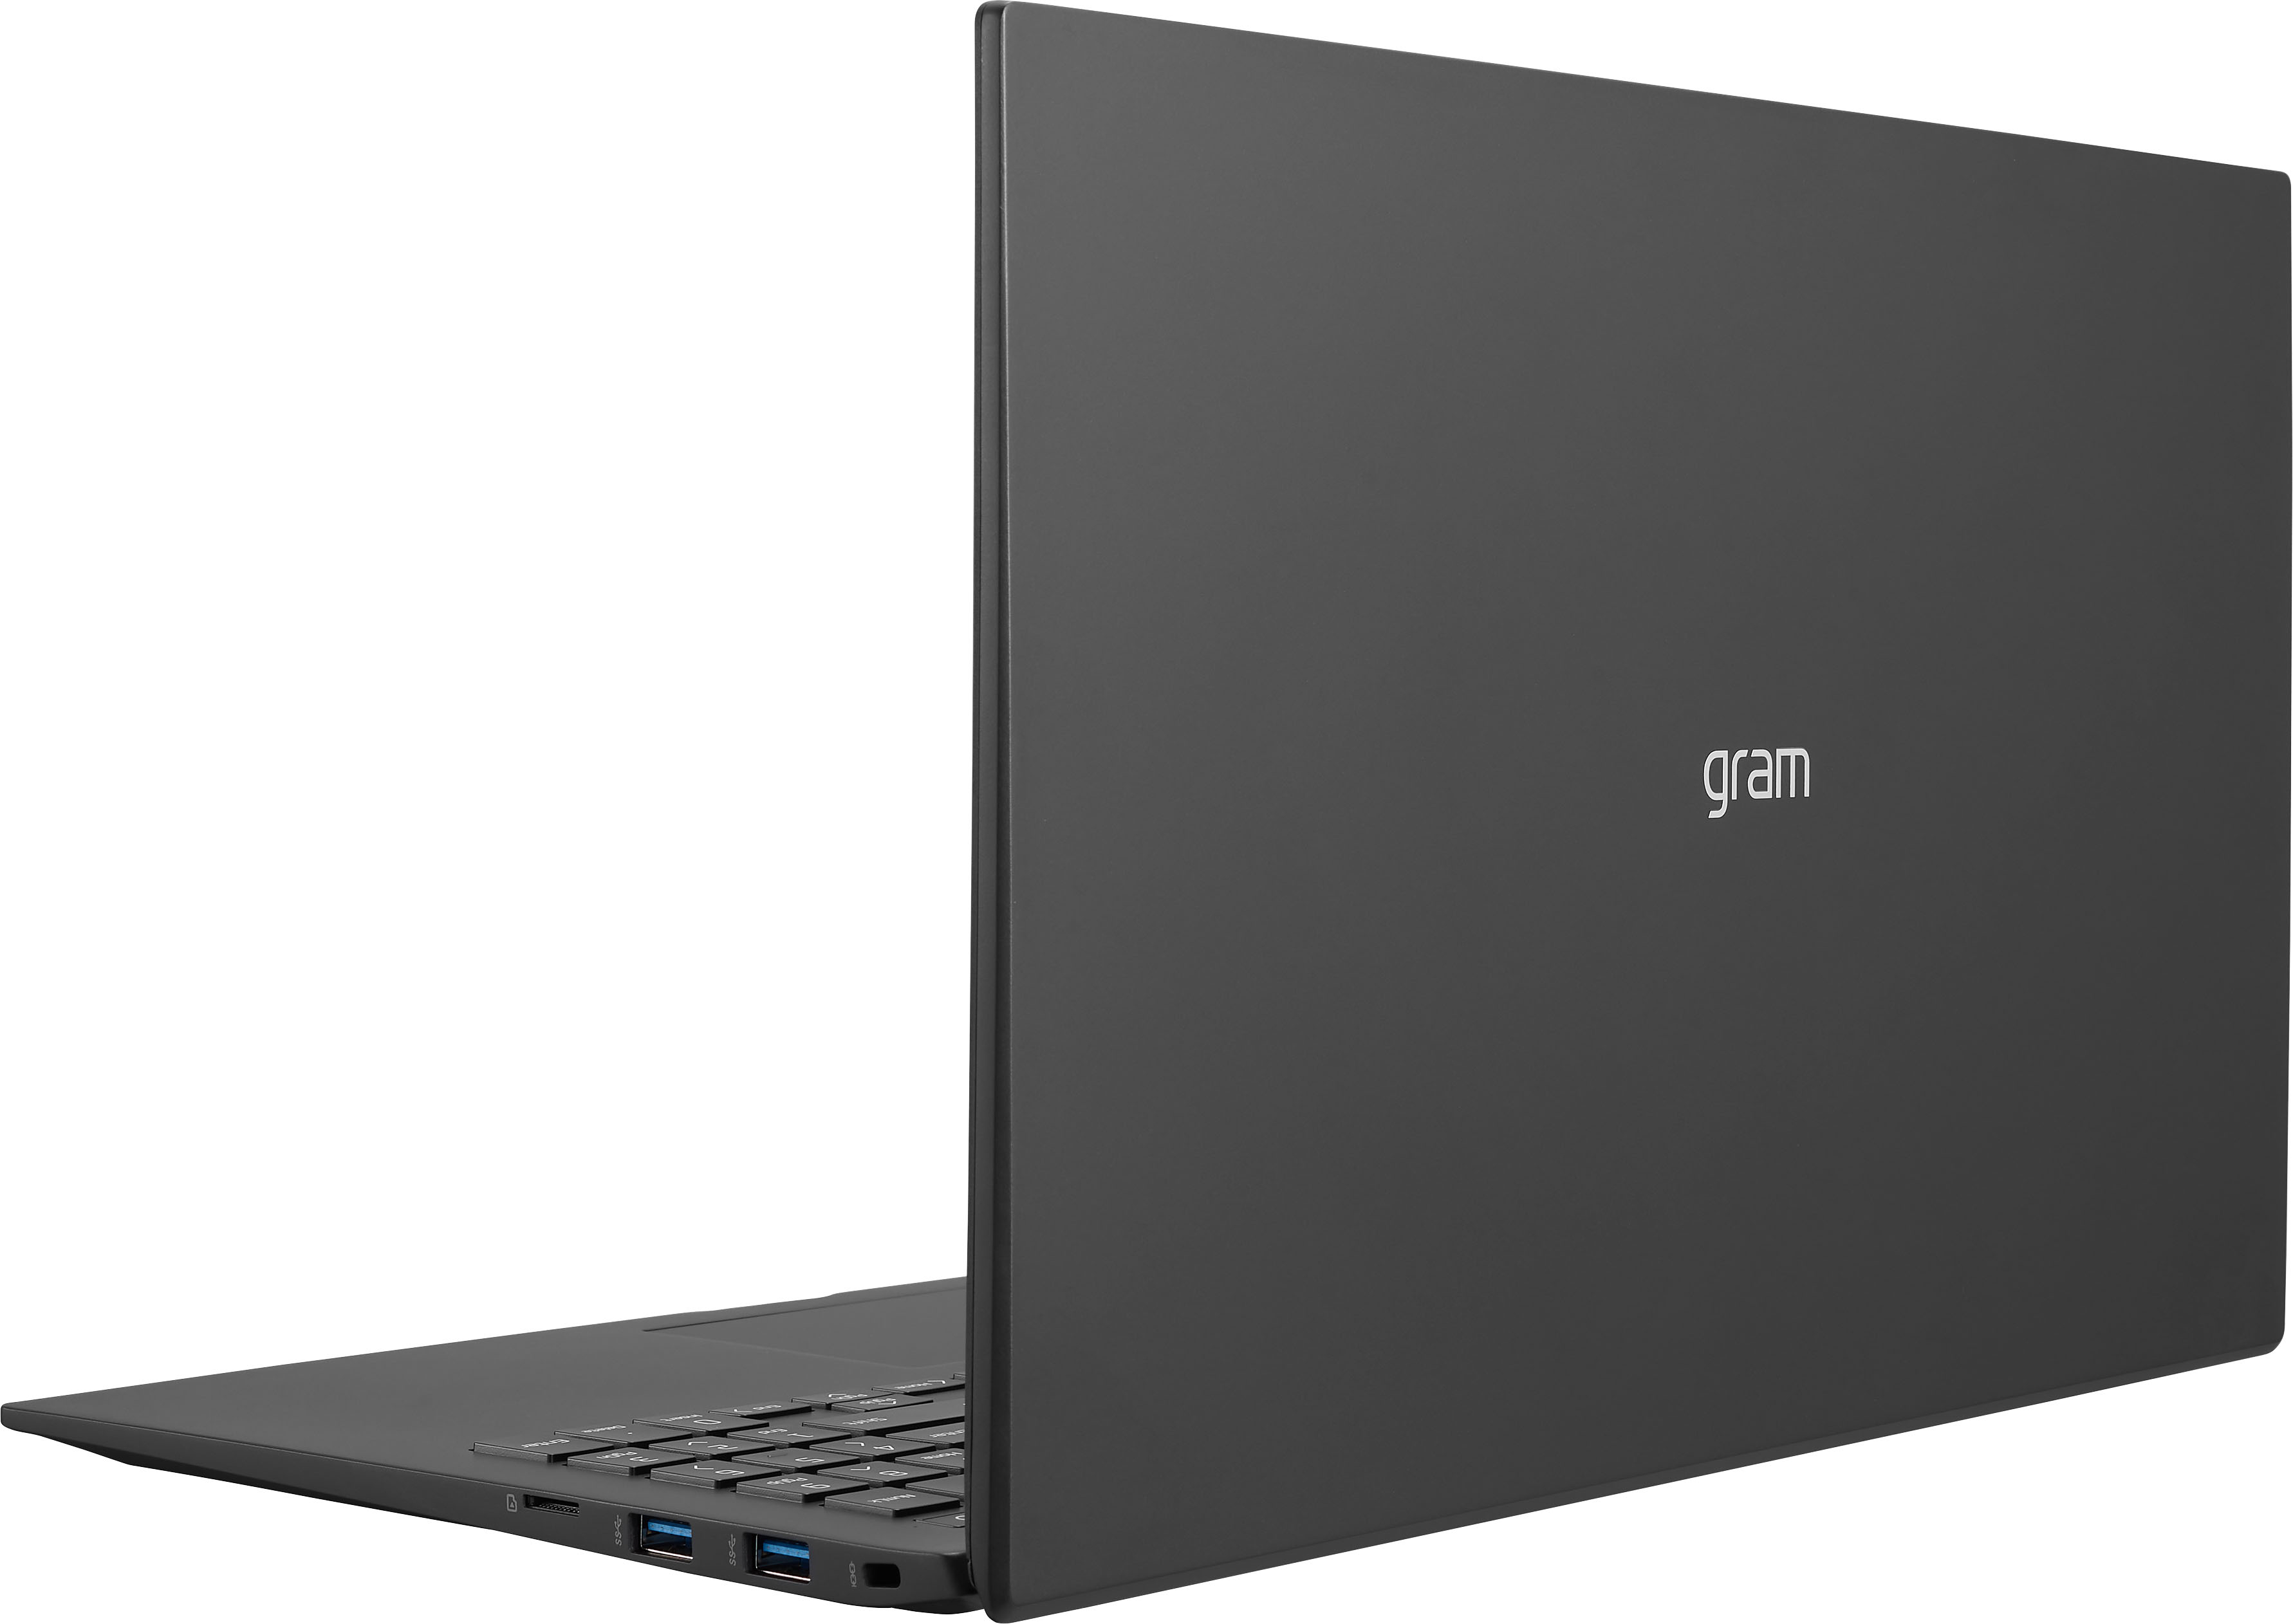 Angle View: LG - gram 15.6” WUXGA IPS Laptop 11th Gen Intel Core i7 32GB RAM 1TB NVMe SSD - Black